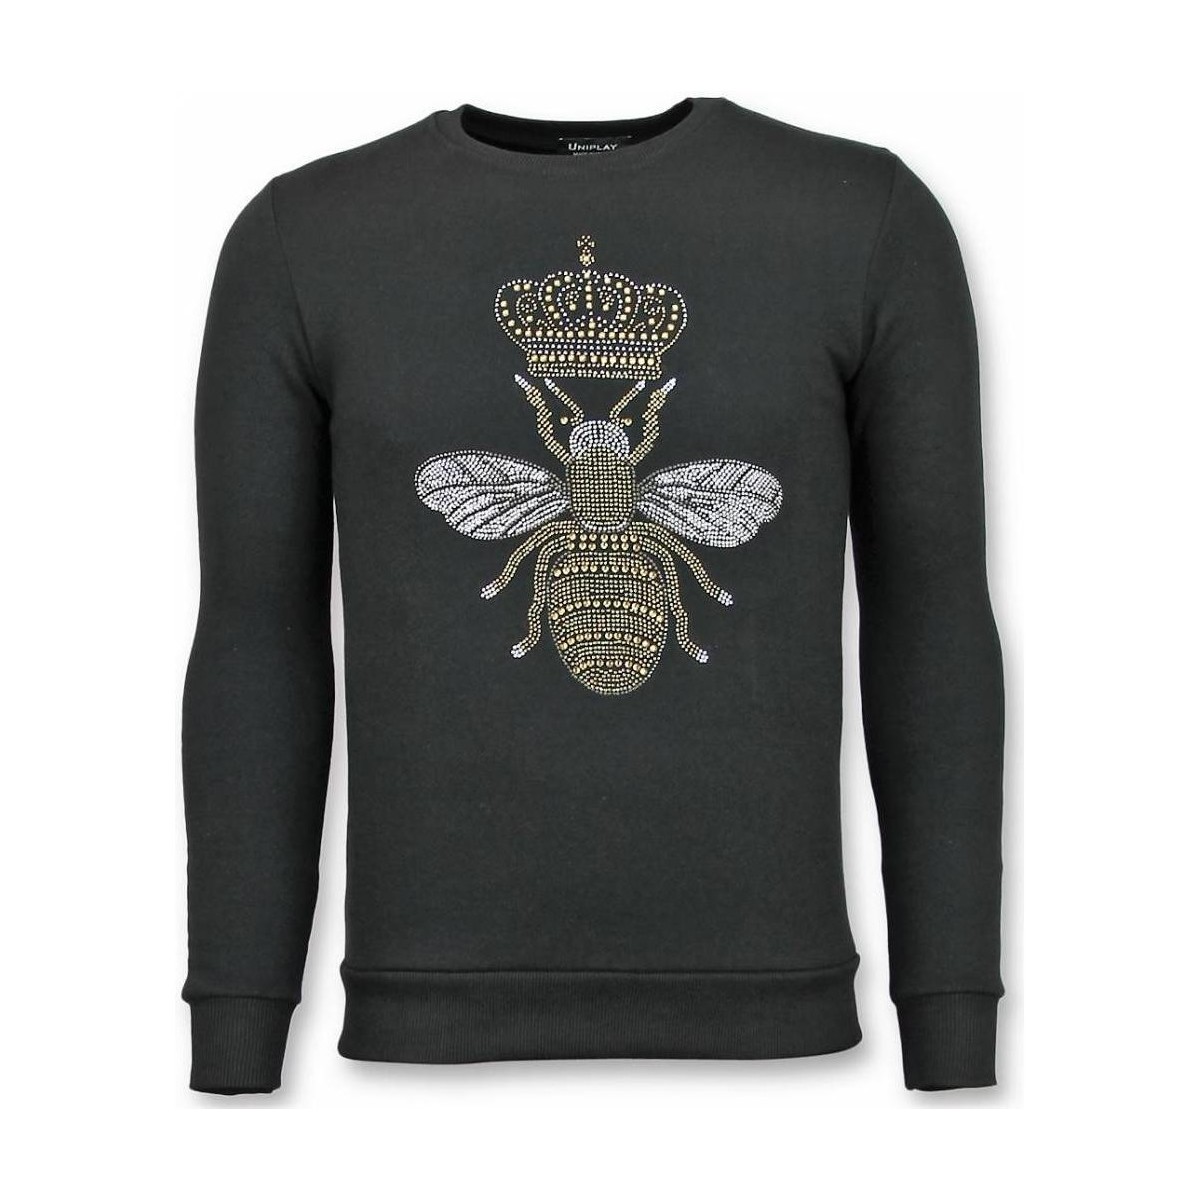 Textiel Heren Sweaters / Sweatshirts Tony Backer Rhinestone Master Bee Zwart